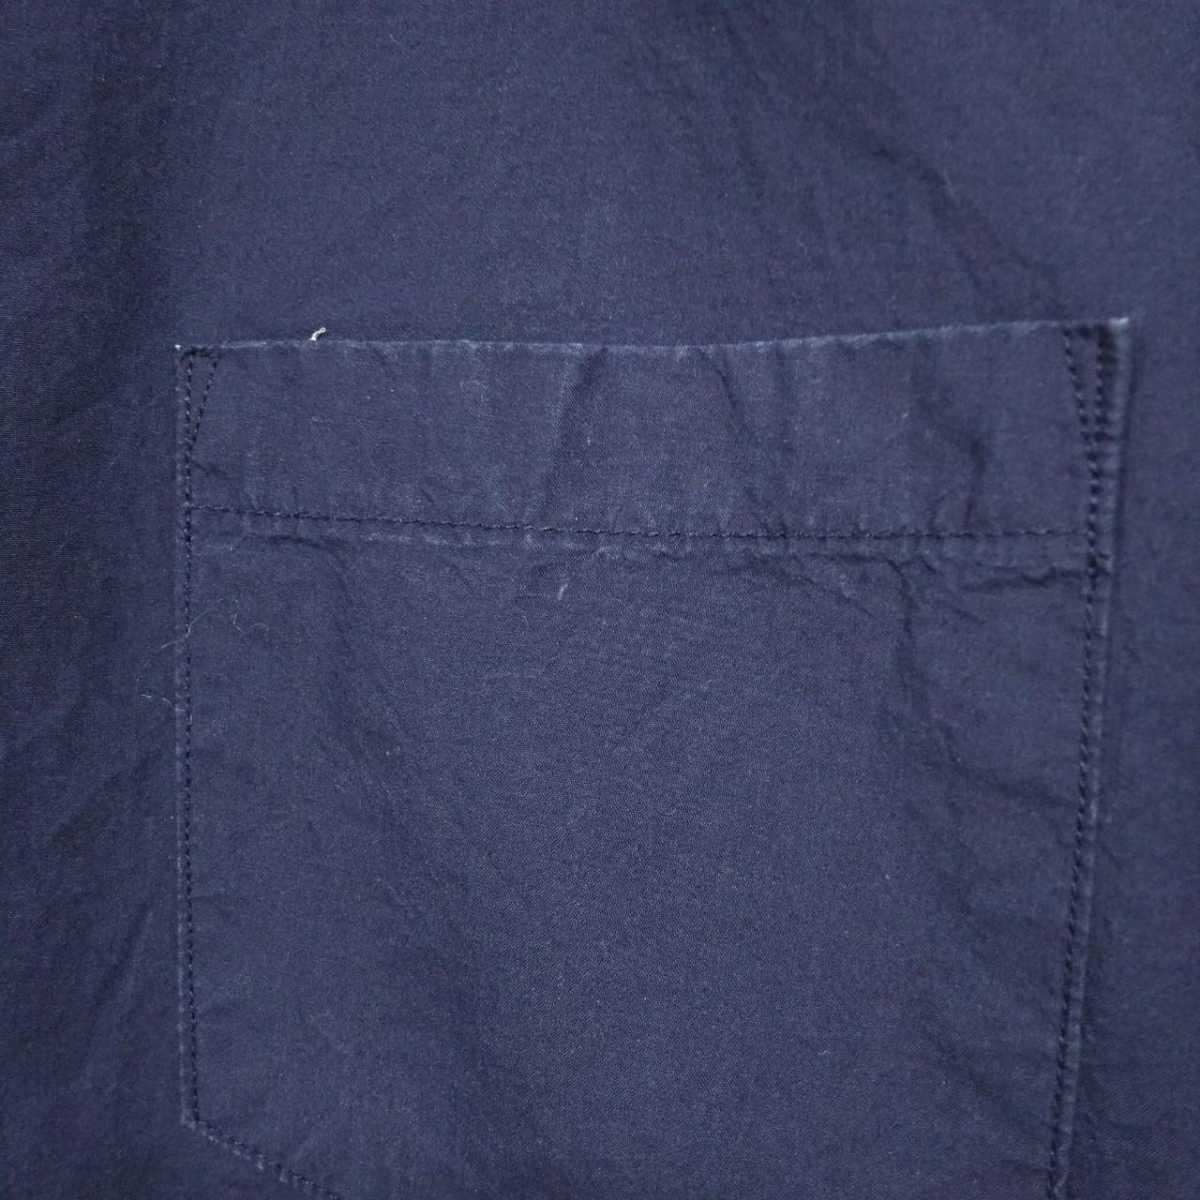 F1124UL*R.N.Aa-ruene-* size M 7 minute sleeve shirt navy men's cotton 100% cotton shirt 